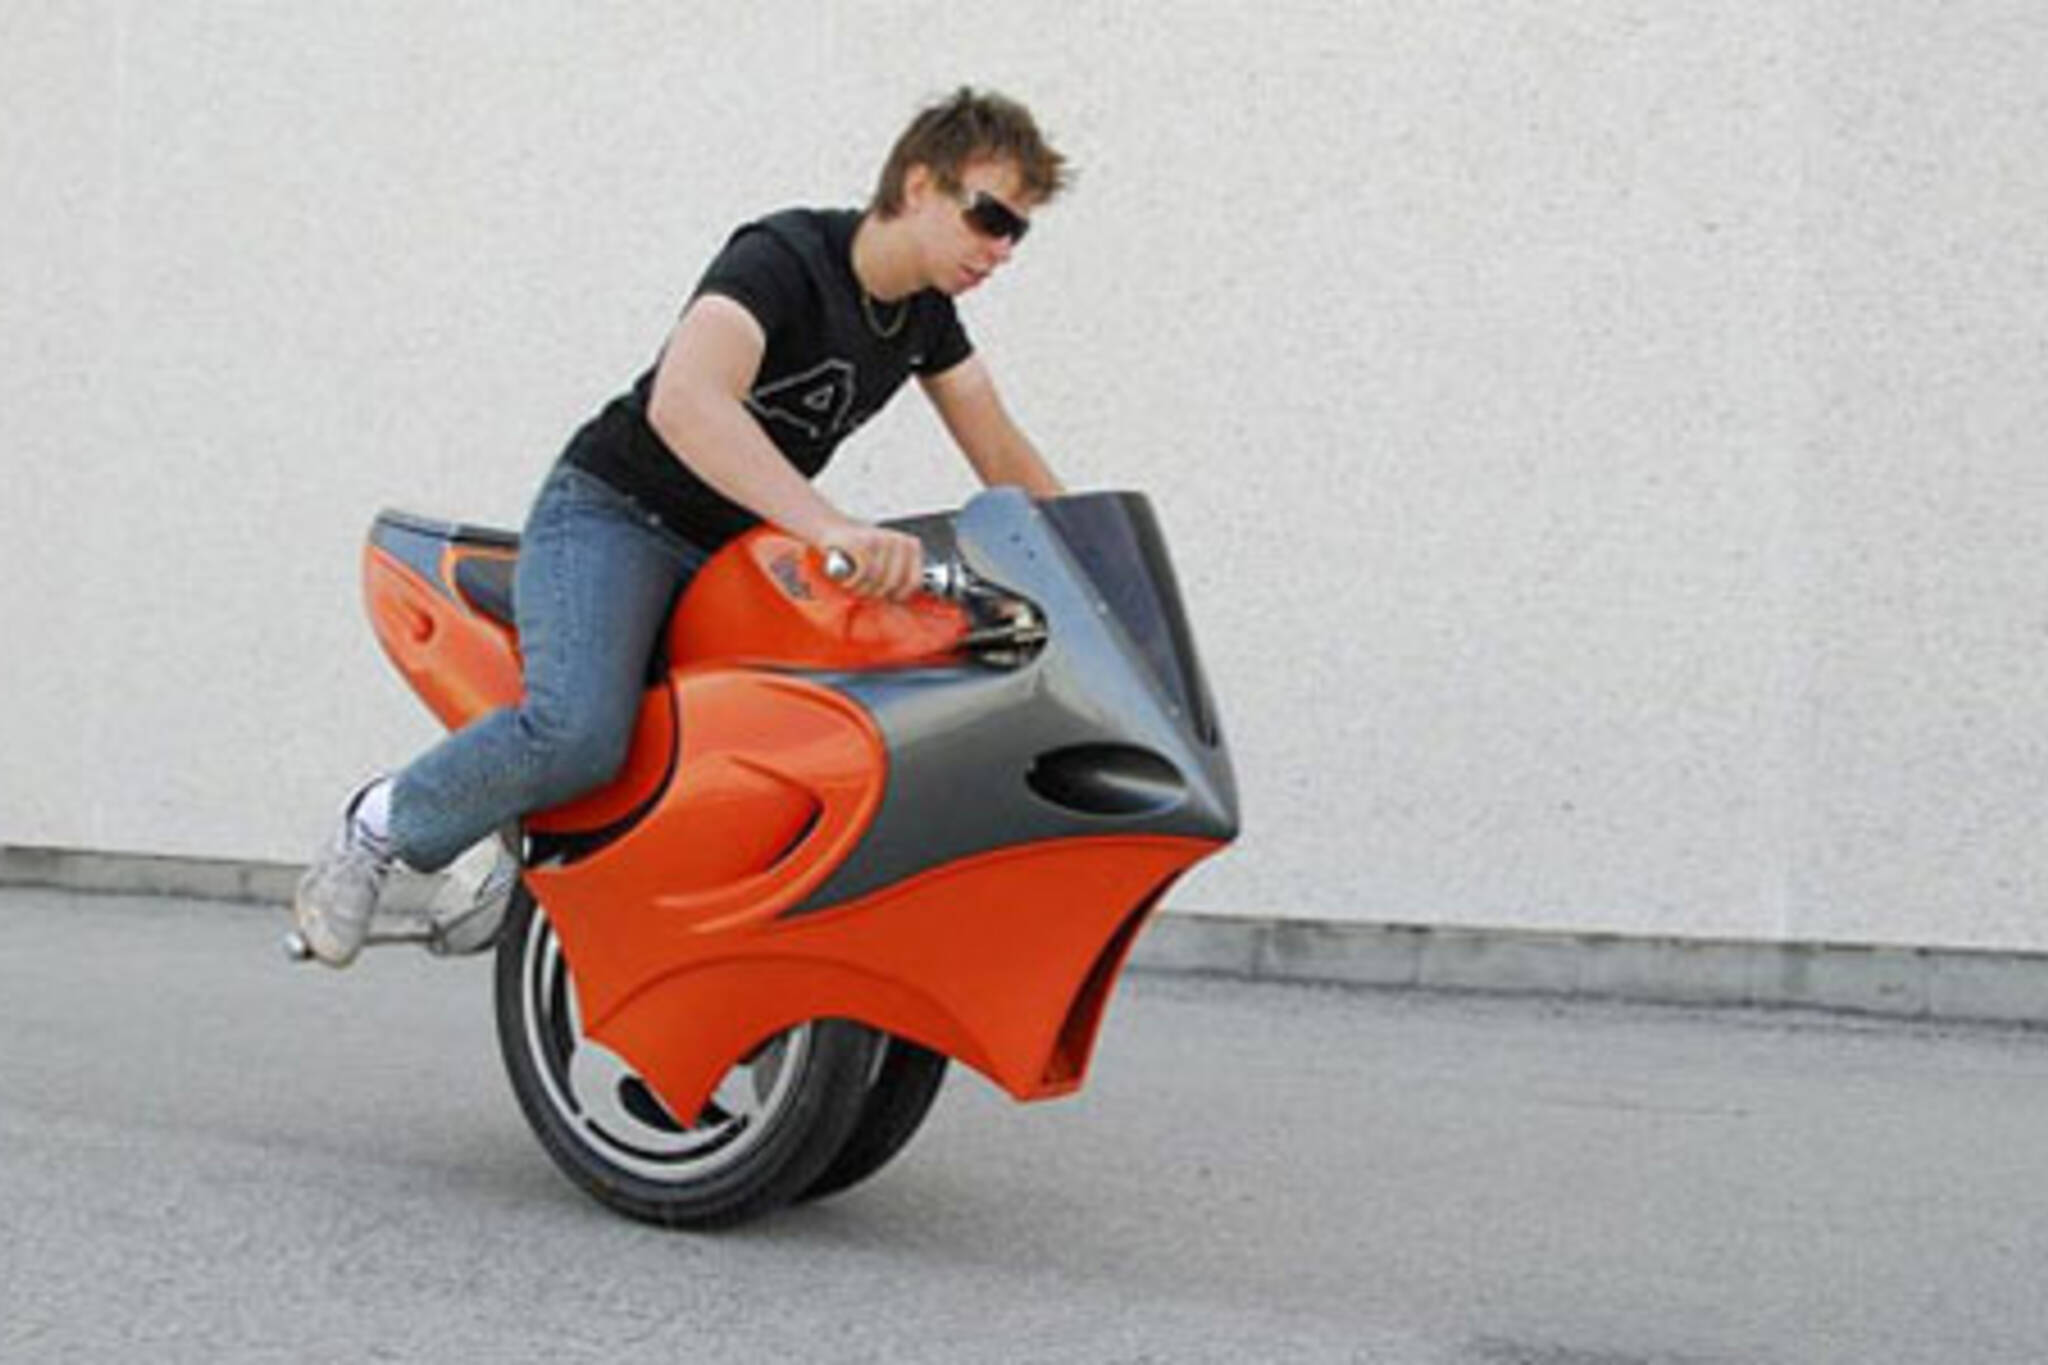 Хочу скутер. Одноколесный мотоцикл Луиджи. Одноколесный мопед. Двухколесный автомобиль. Мопед на одном колесе.